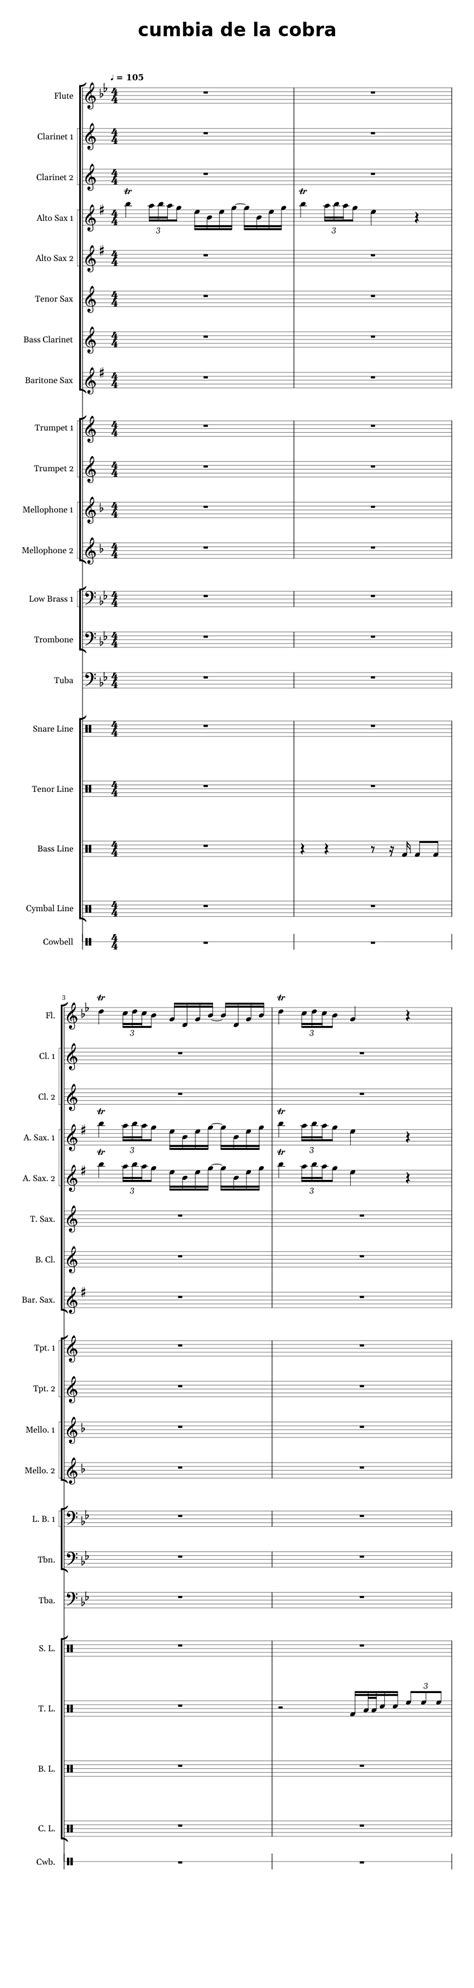 cumbia de la cobra sheet music for trombone tuba mellophone flute and more instruments